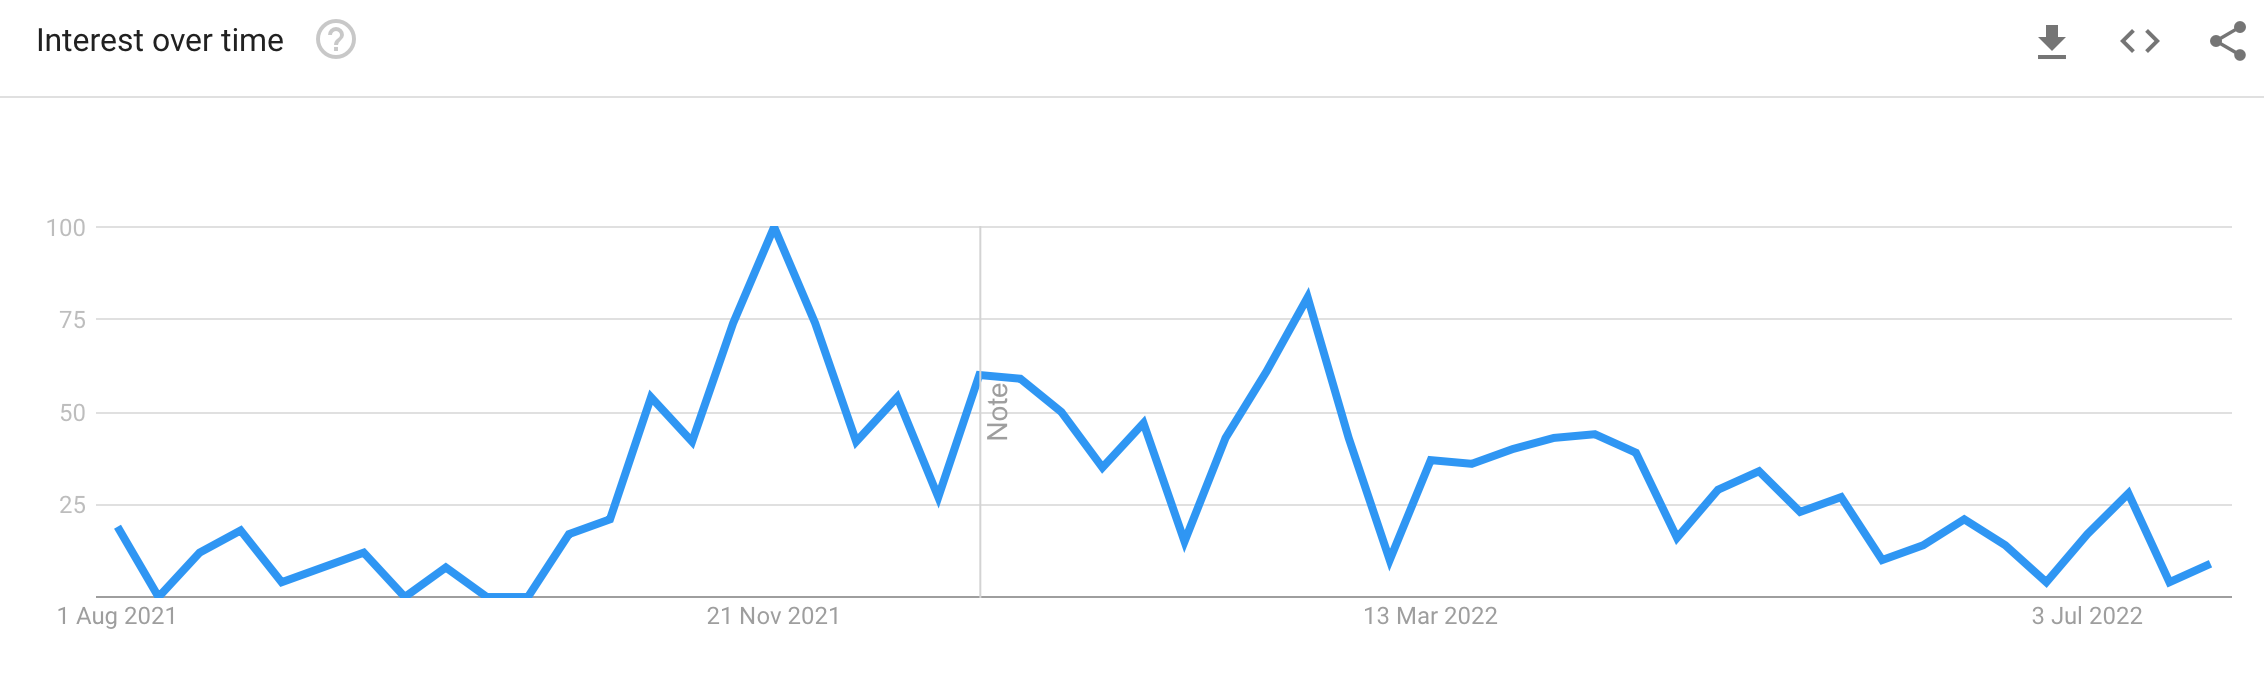 Decentraland. Google Trends, Worldwide. (Source: Google)